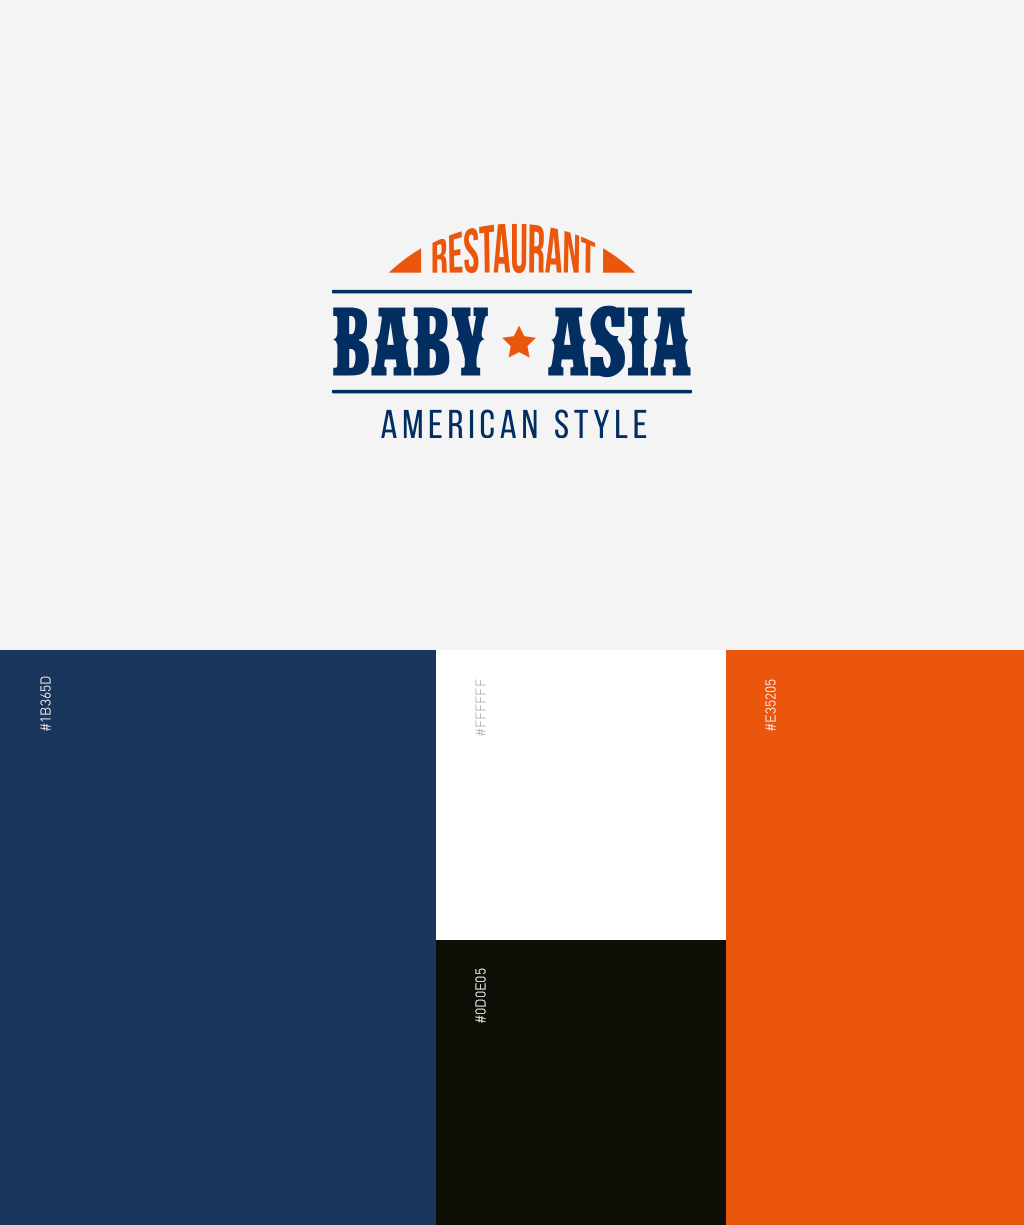 Imagen Corporativa Restaurante Baby Asia